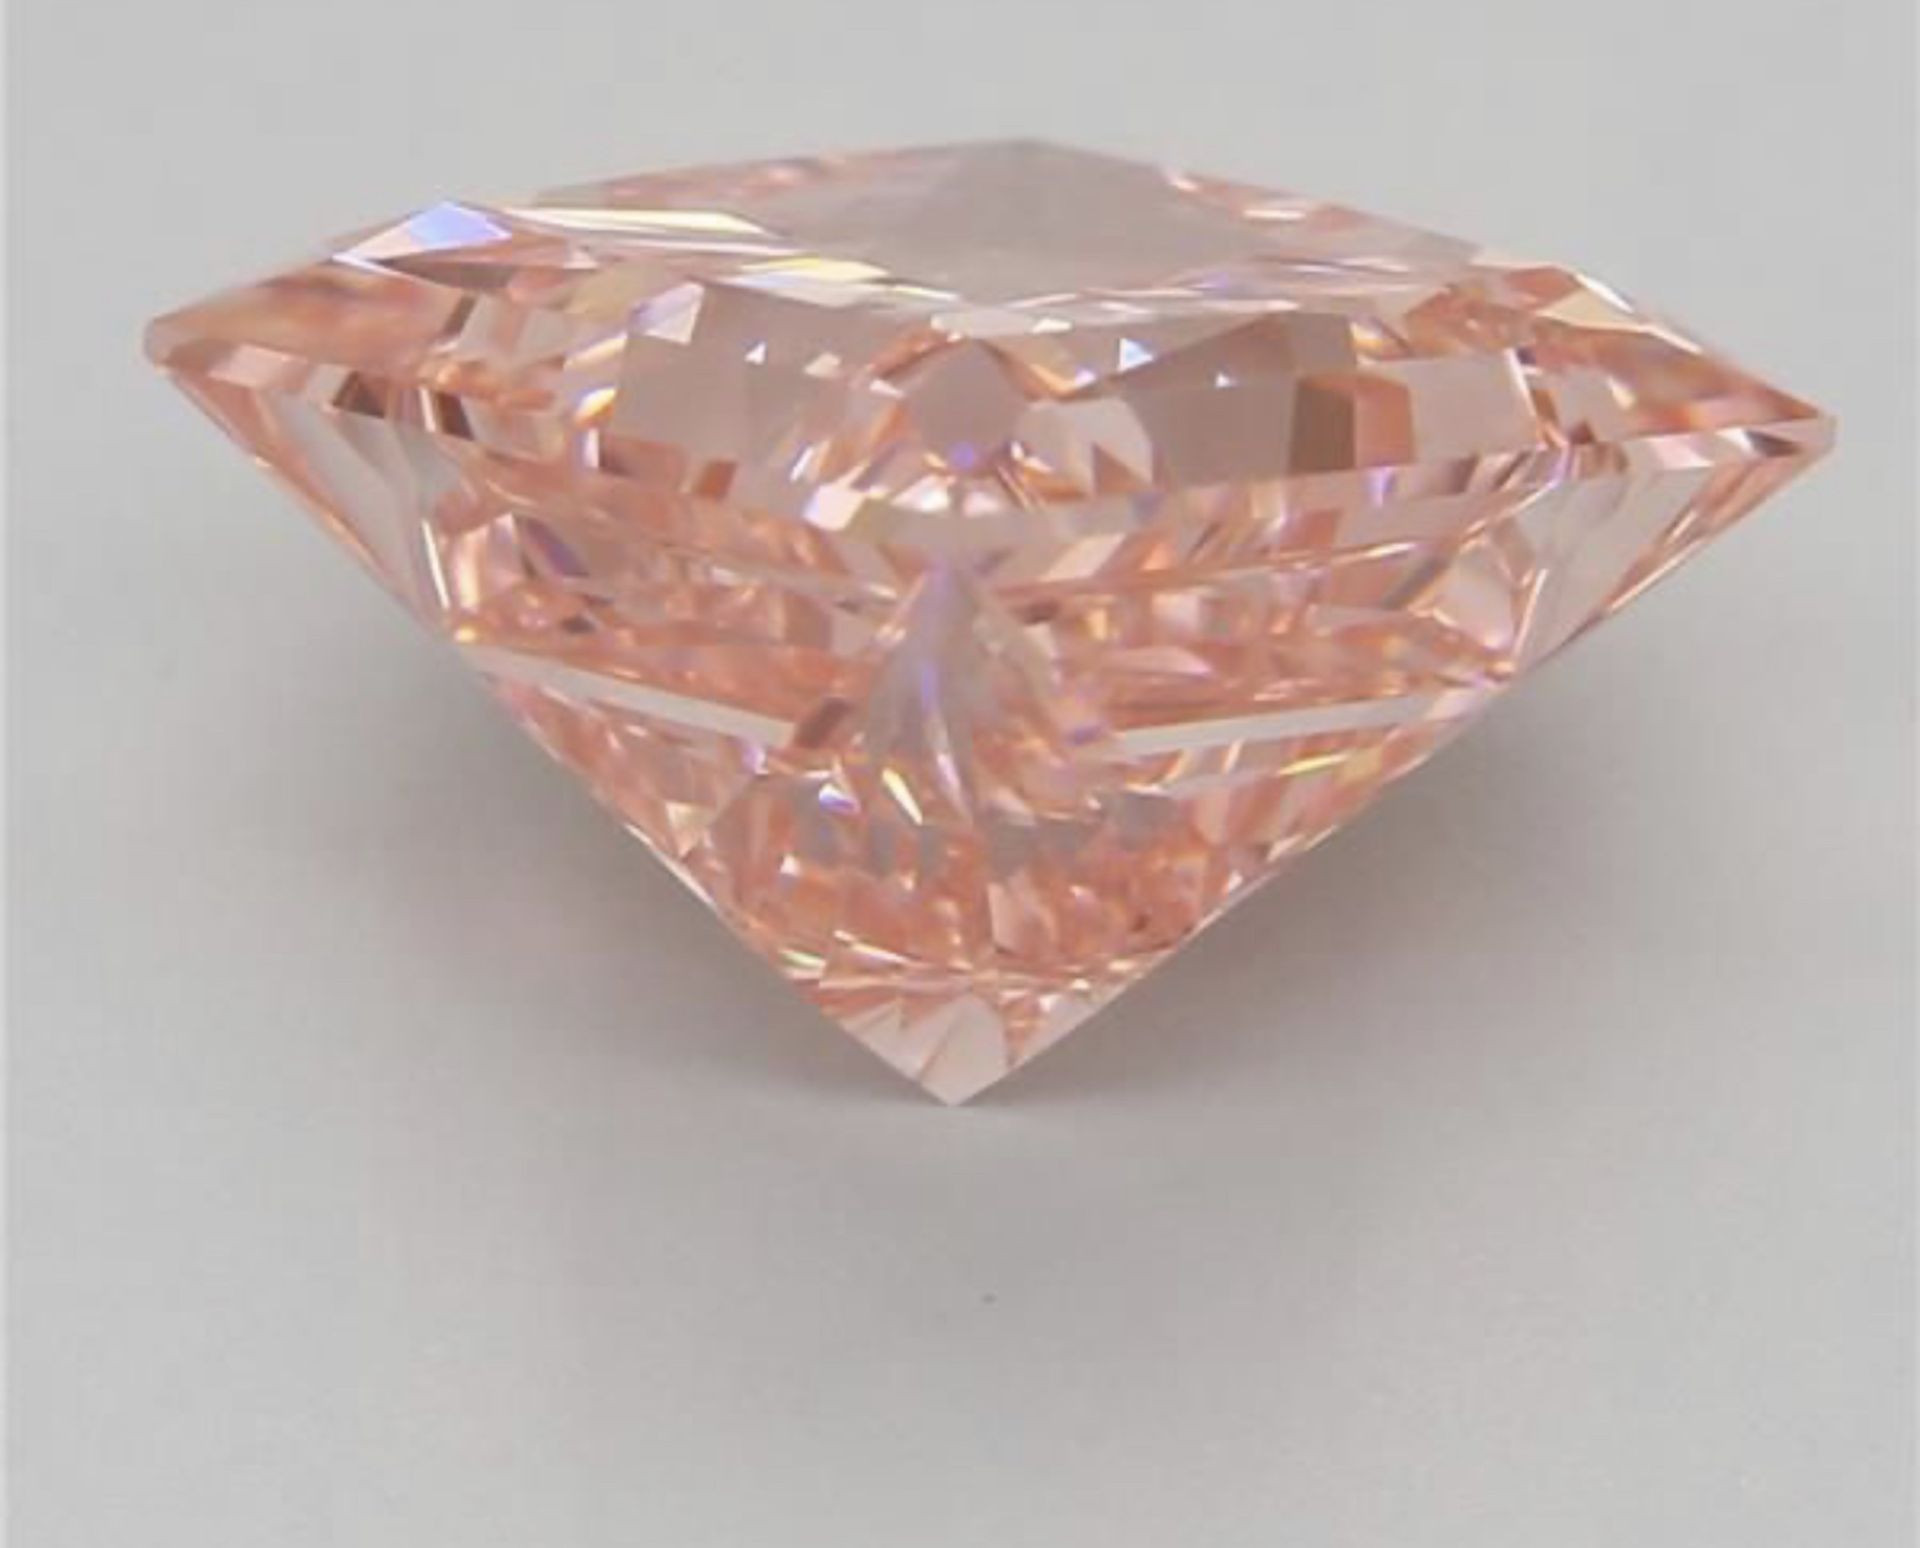 ** ON SALE ** Princess Cut Diamond Fancy Pink Colour VVS2 Clarity 3.02 Carat EX EX - LG593370815 - Image 4 of 8